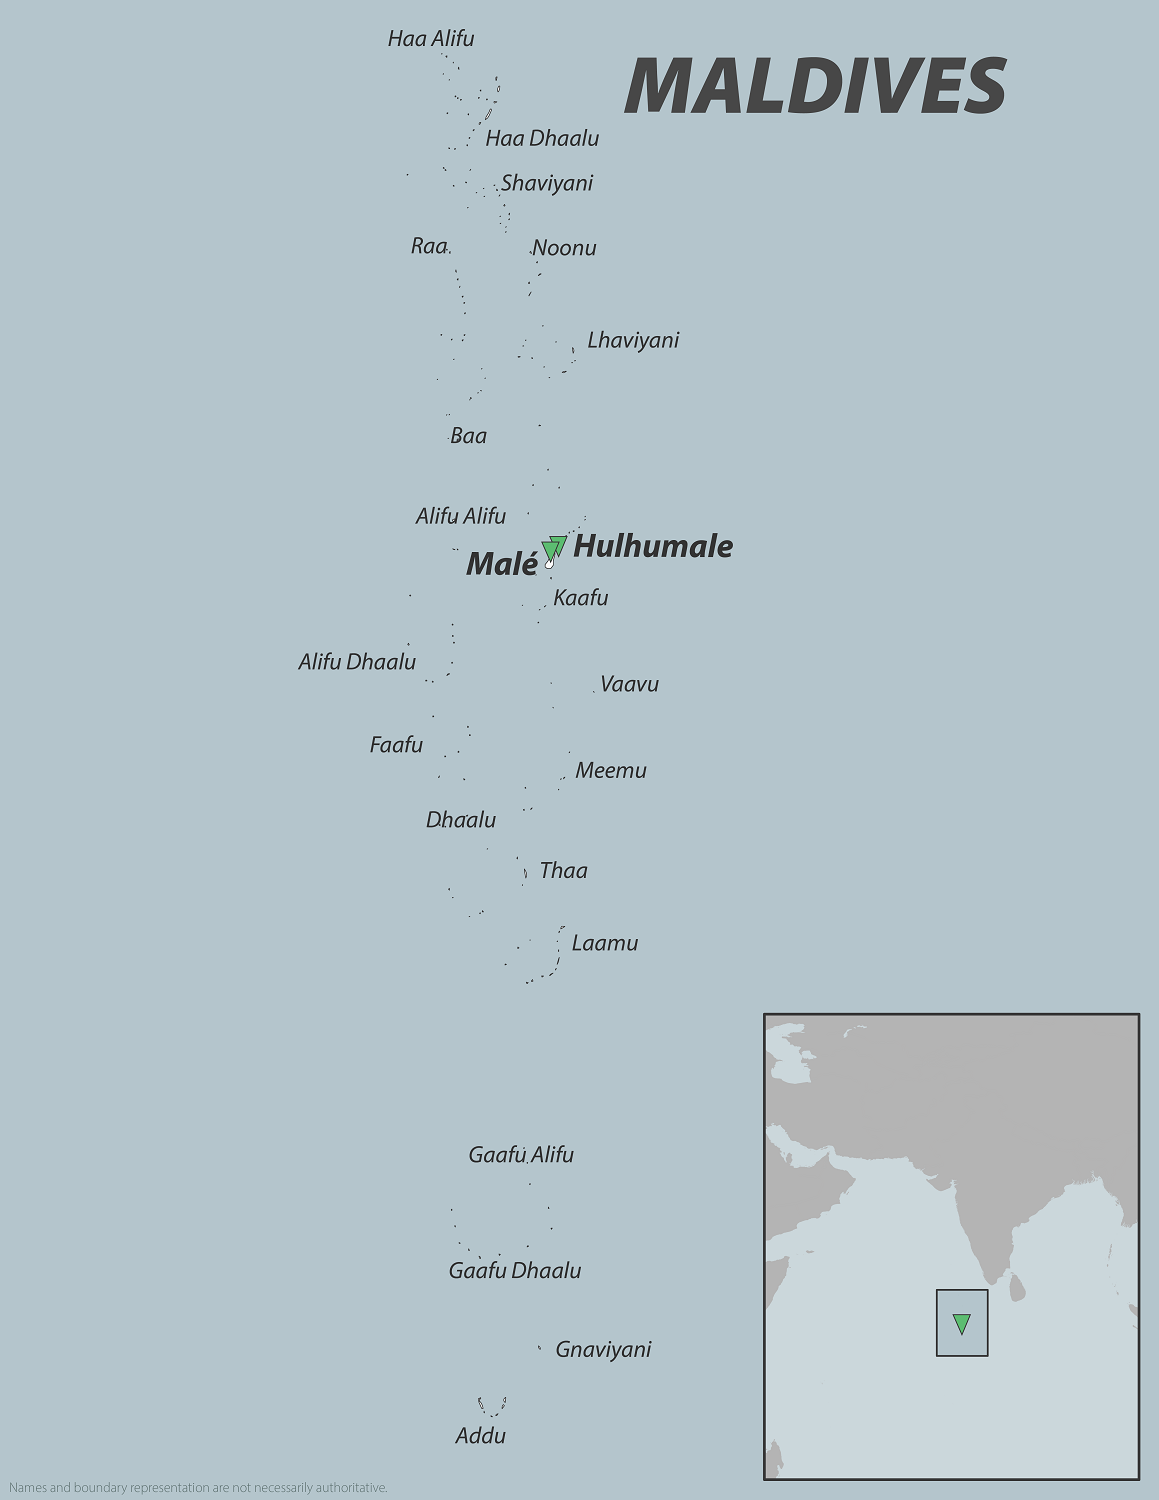 Green indicates chikungunya outbreak areas in Maldives